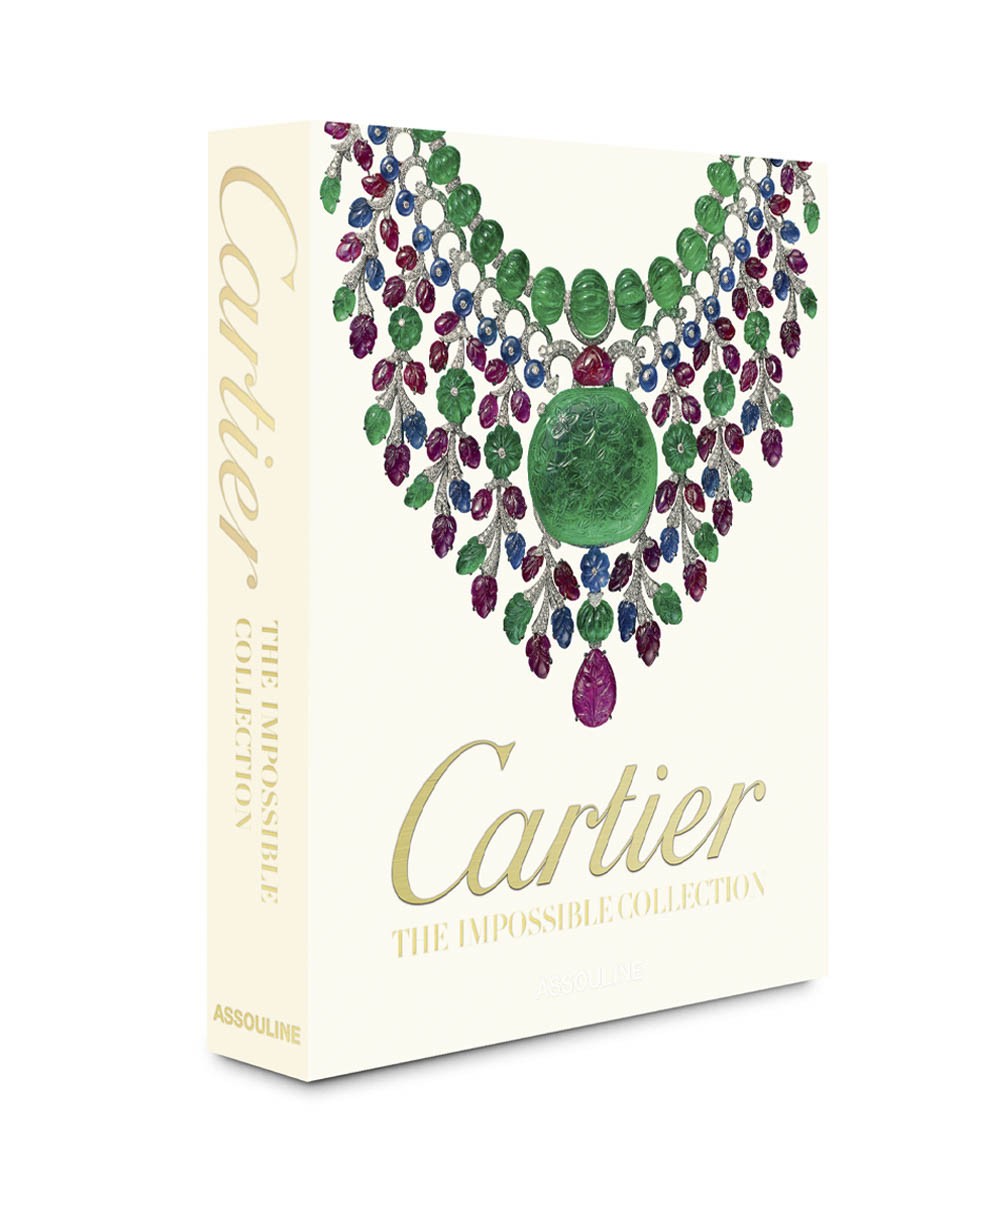 Cover des Bildbands „Cartier: The Impossible Collection“ von Assouline im RAUM concept store 